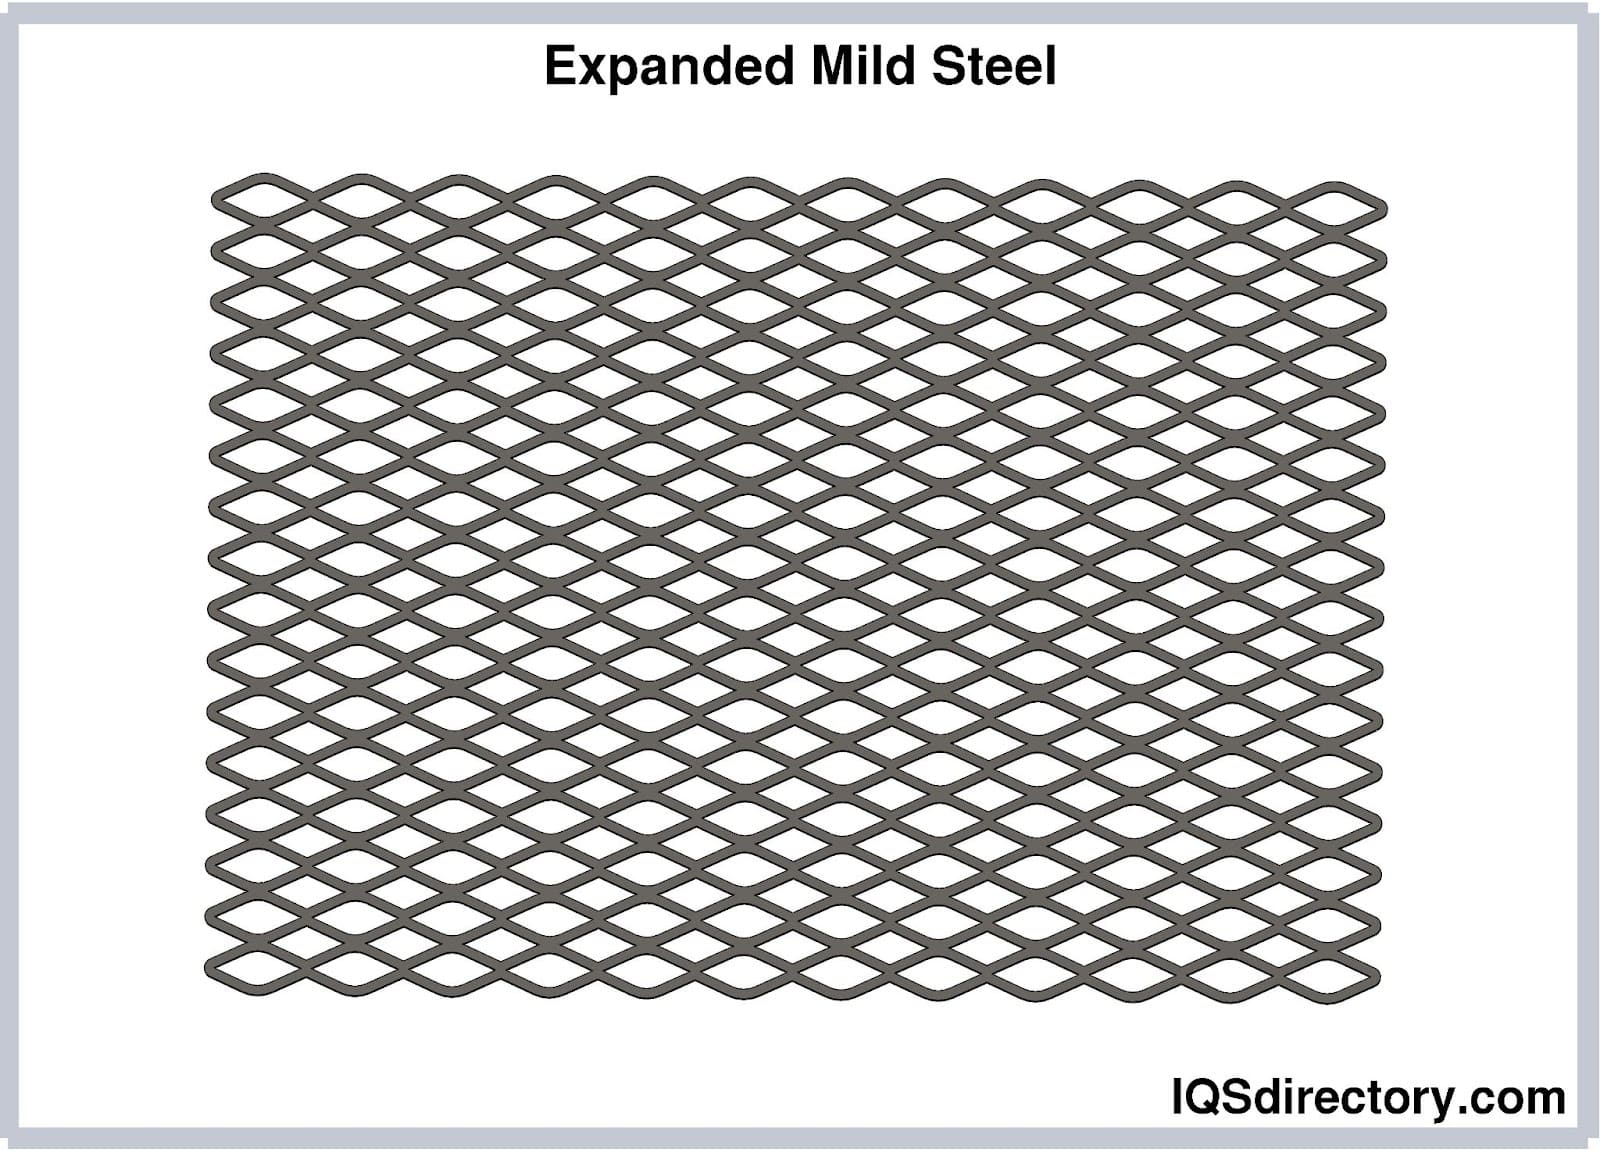 Expanded Mild Steel